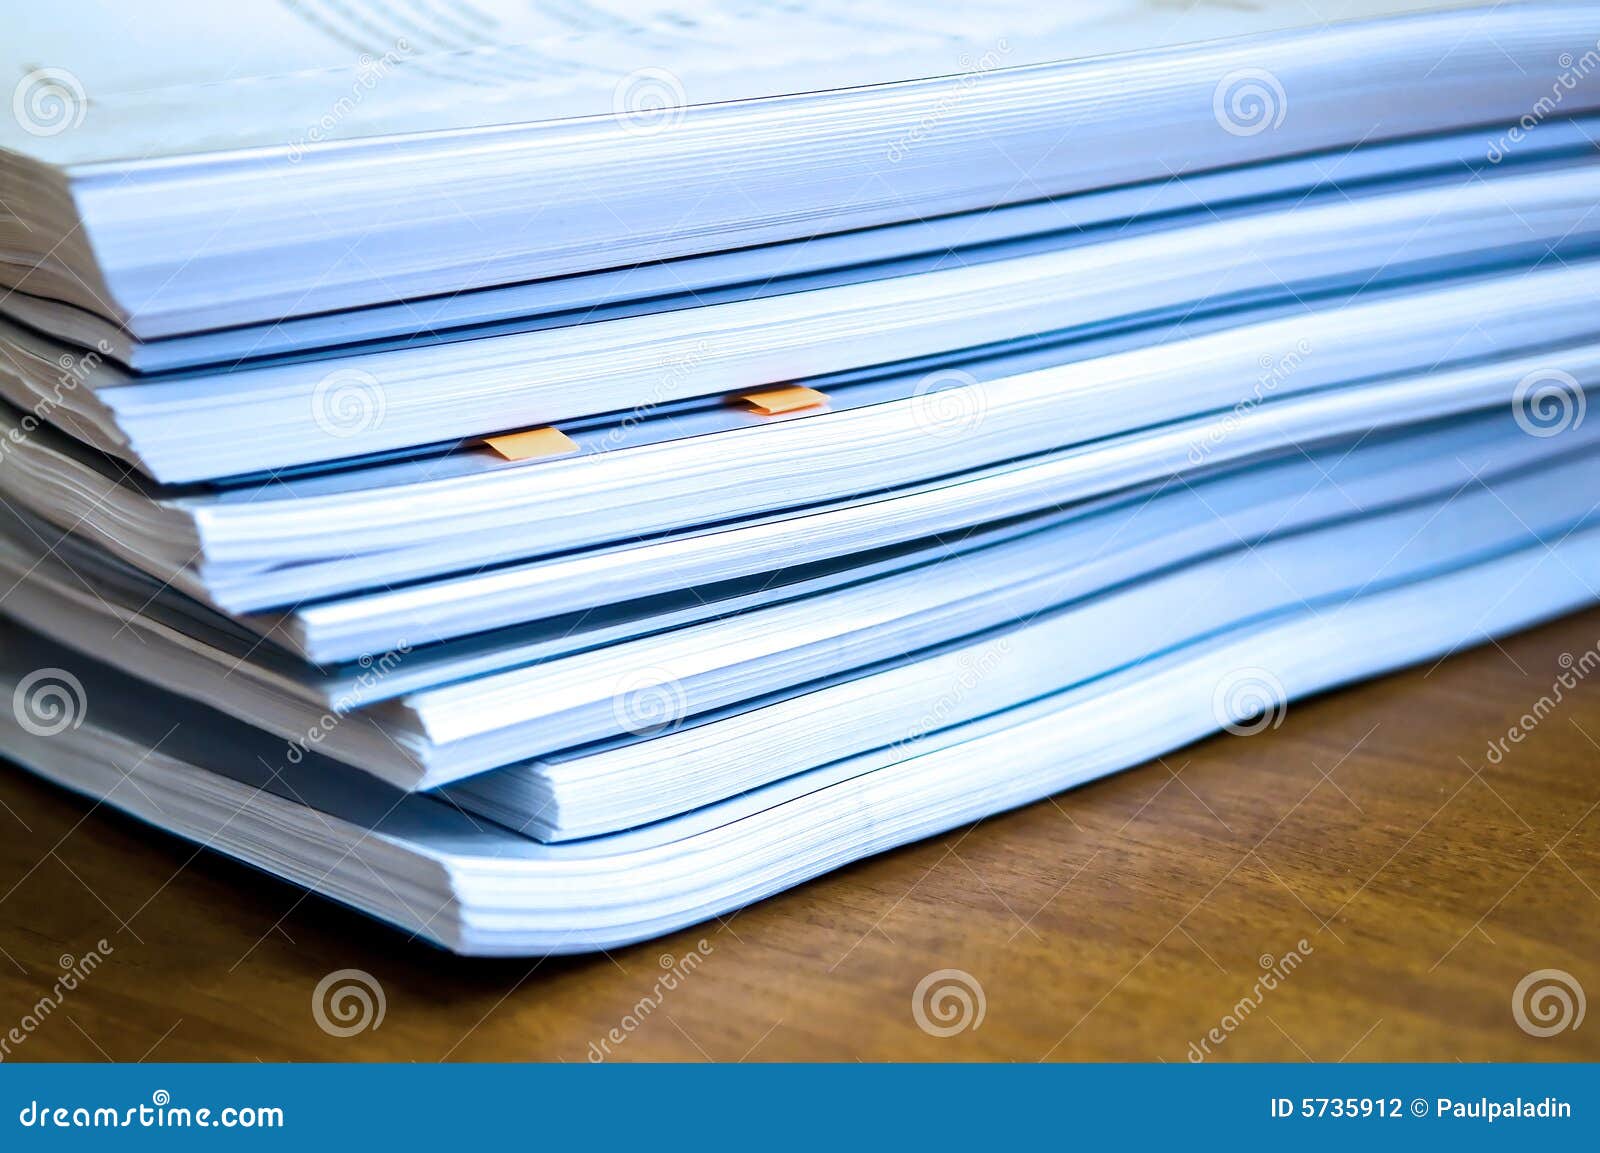 piles of documents